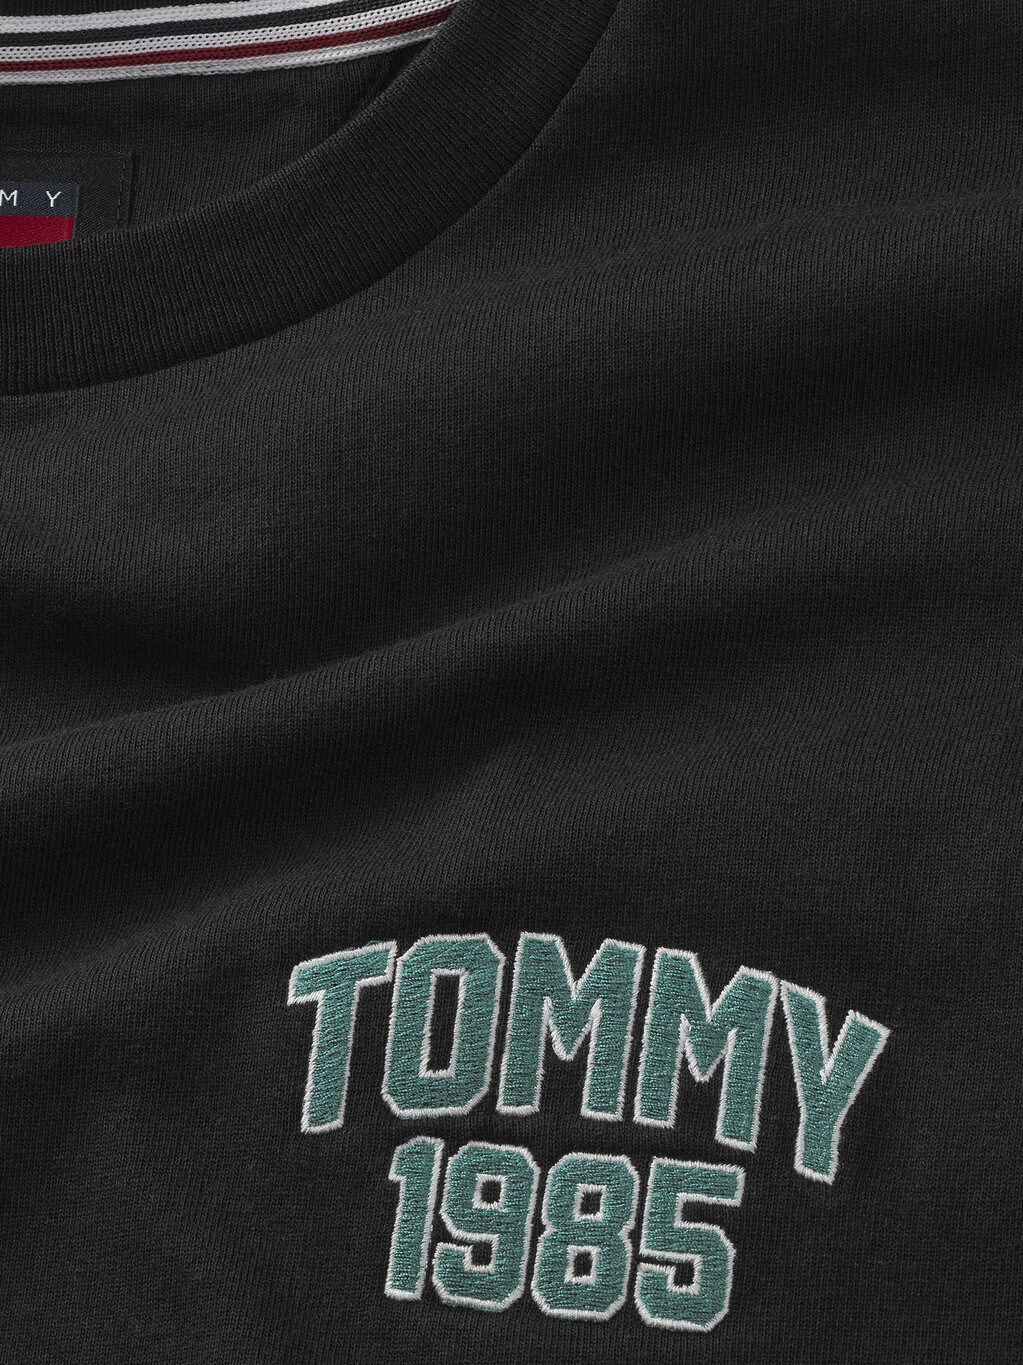 Tommy 1985 Varsity T-Shirt, Black, hi-res